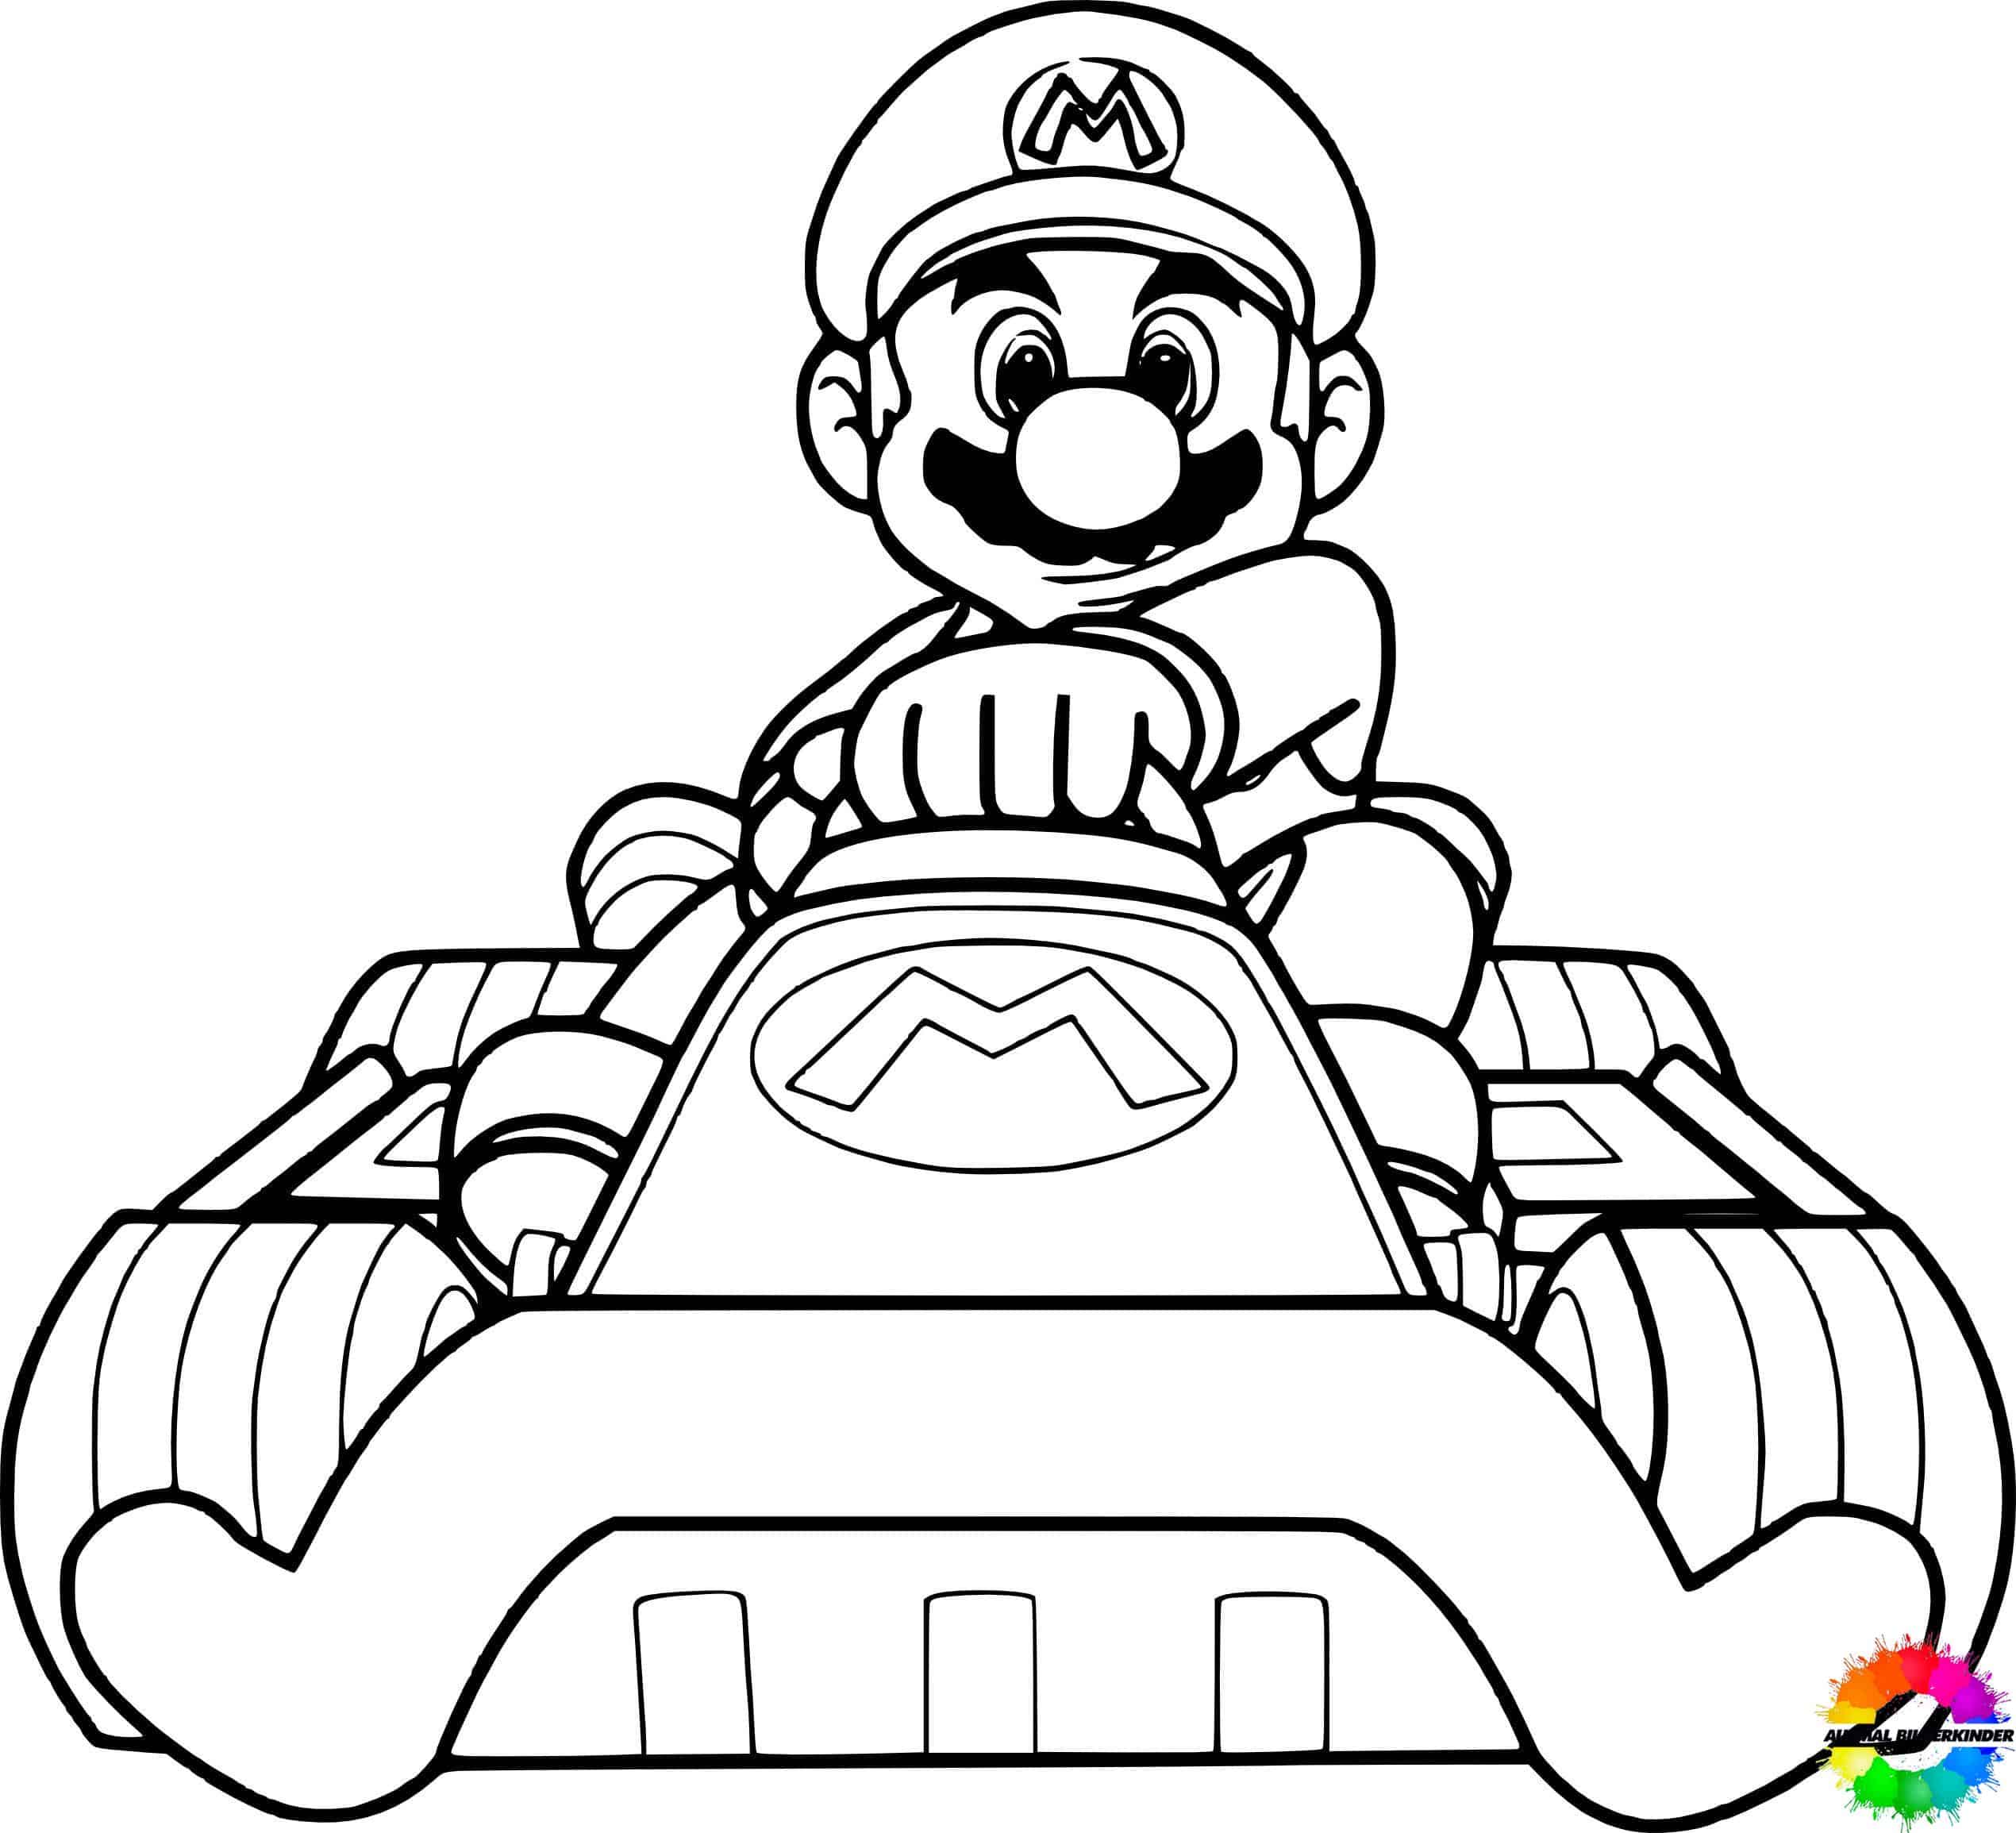 Mario-Kart-ausmalbilder-ausmalbilderkinder-de-41